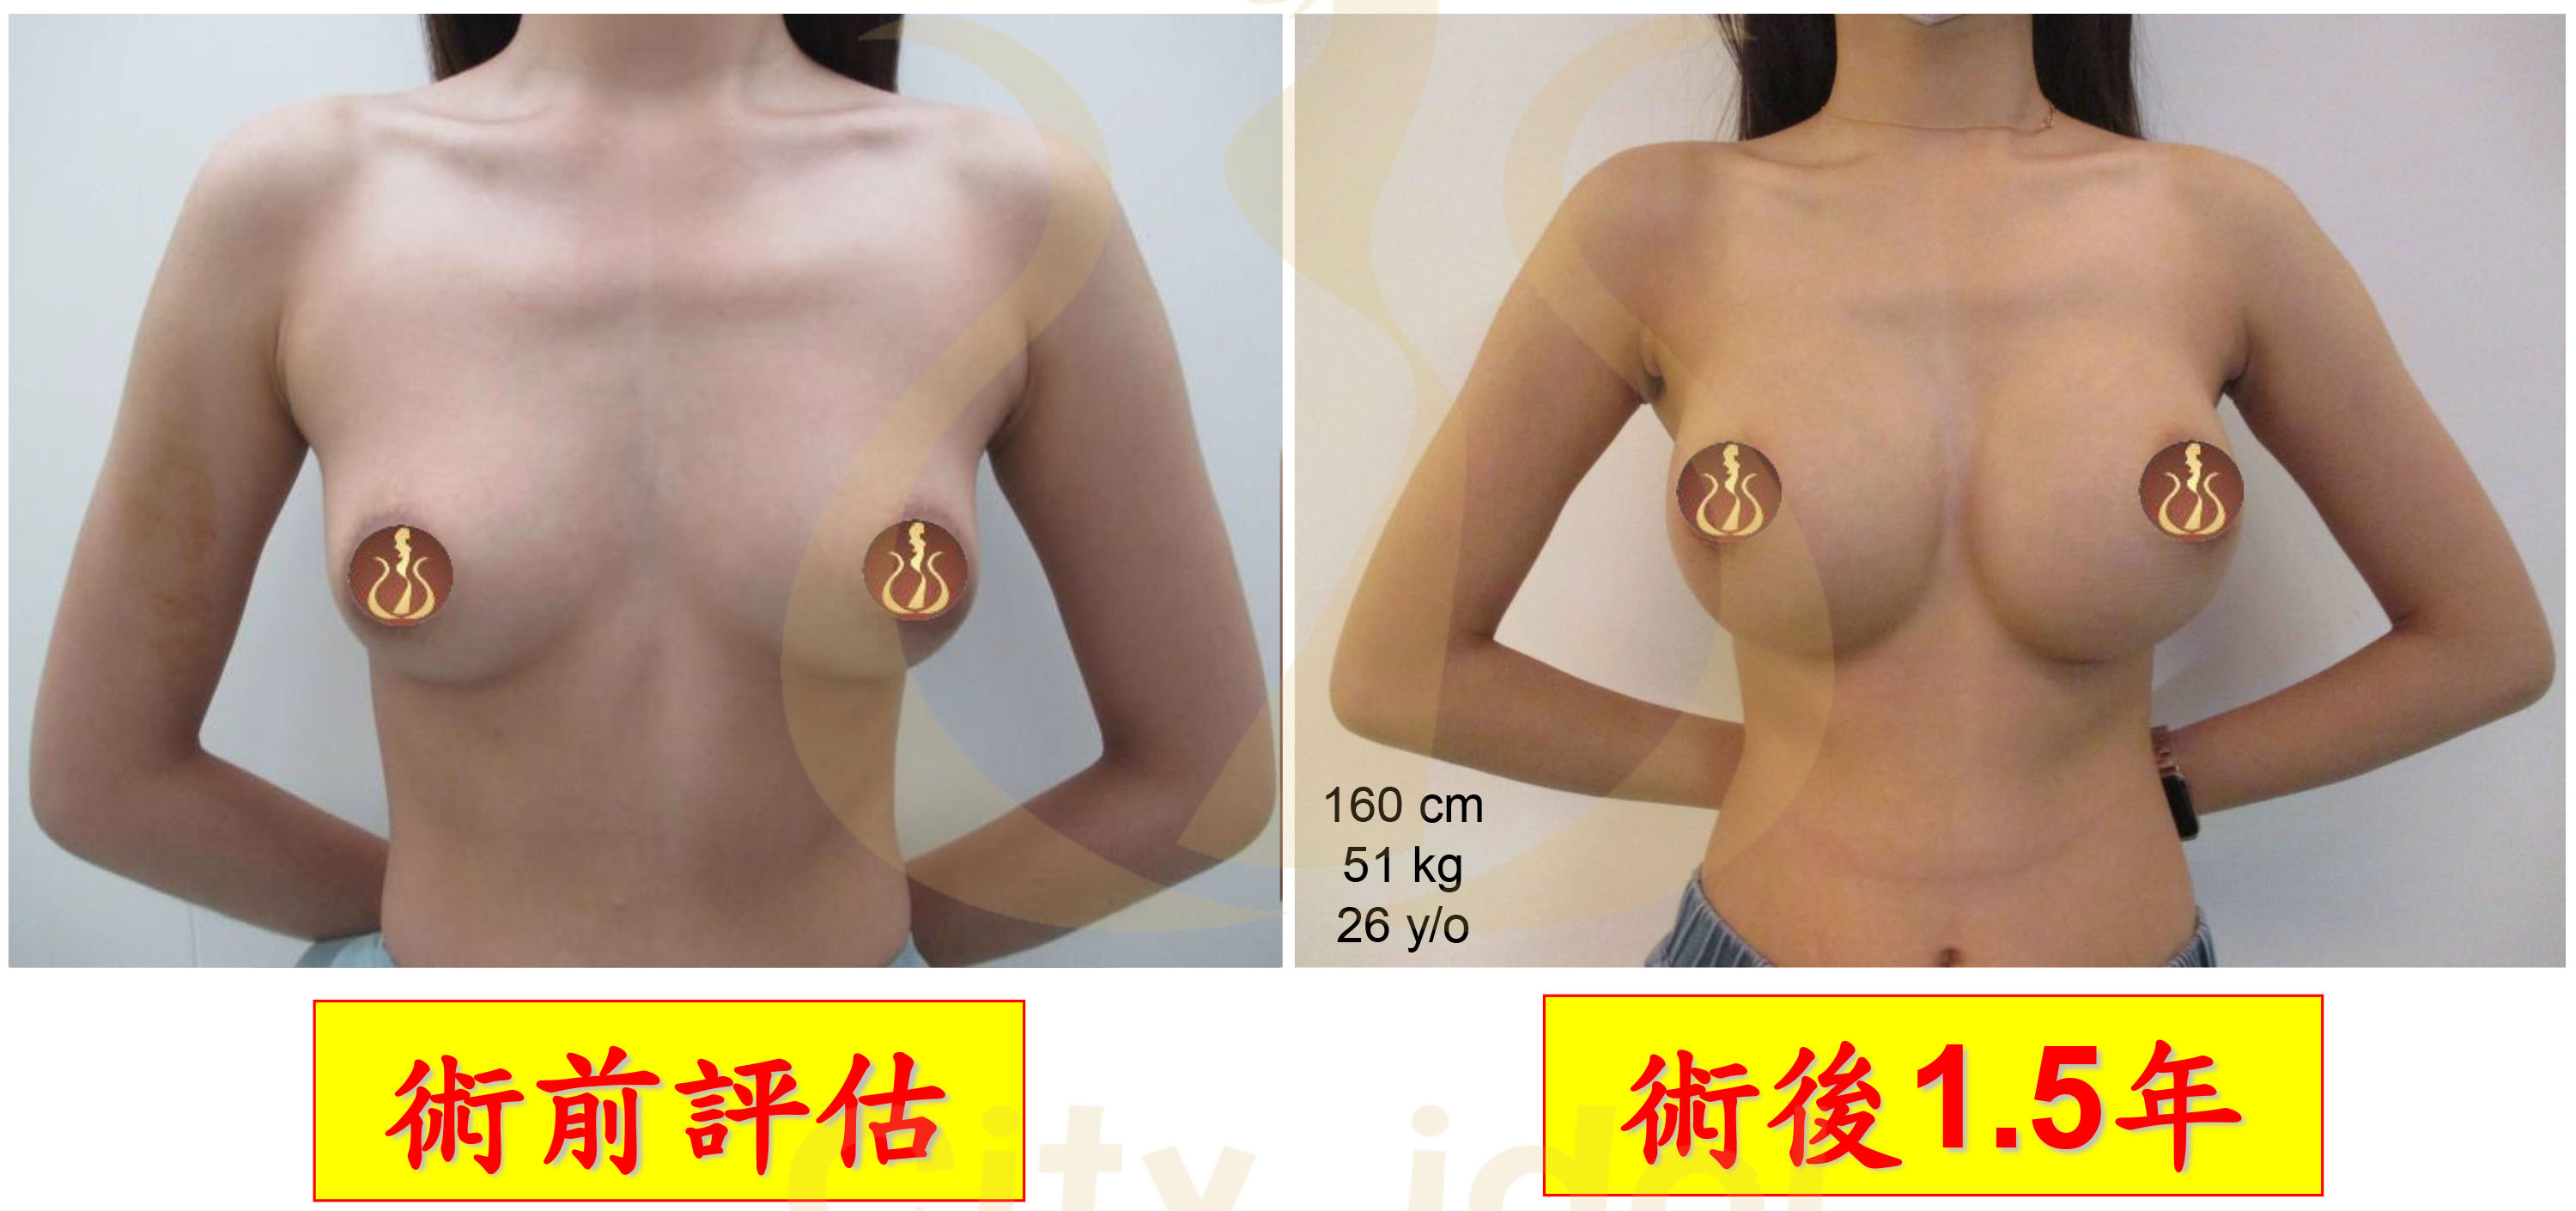 Mentor曼陀水滴術前及術後1.5年比較胸罩